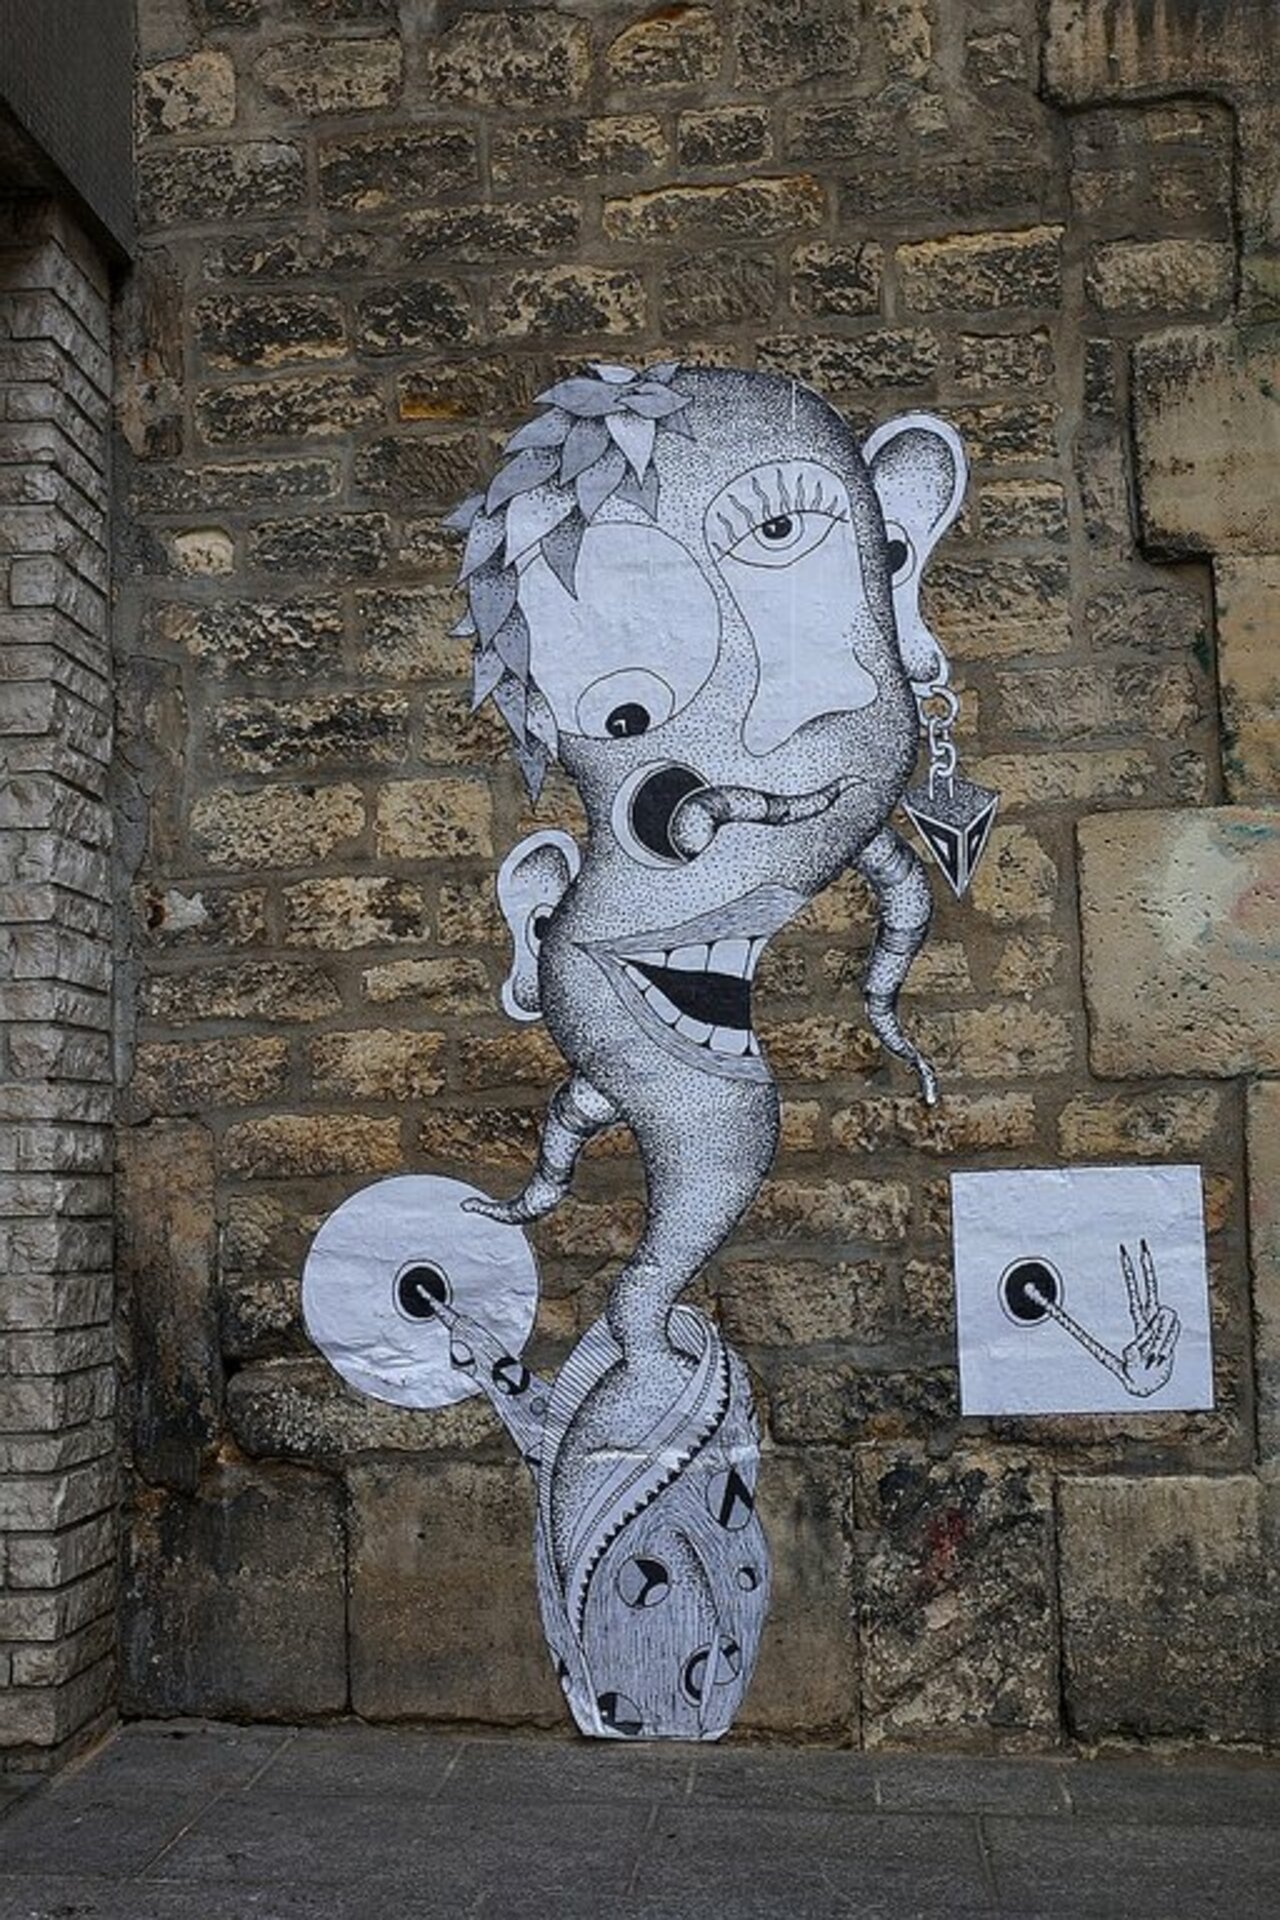 Street Art by anonymous in #Paris http://www.urbacolors.com #art #mural #graffiti #streetart https://t.co/hQu0iiuF6o